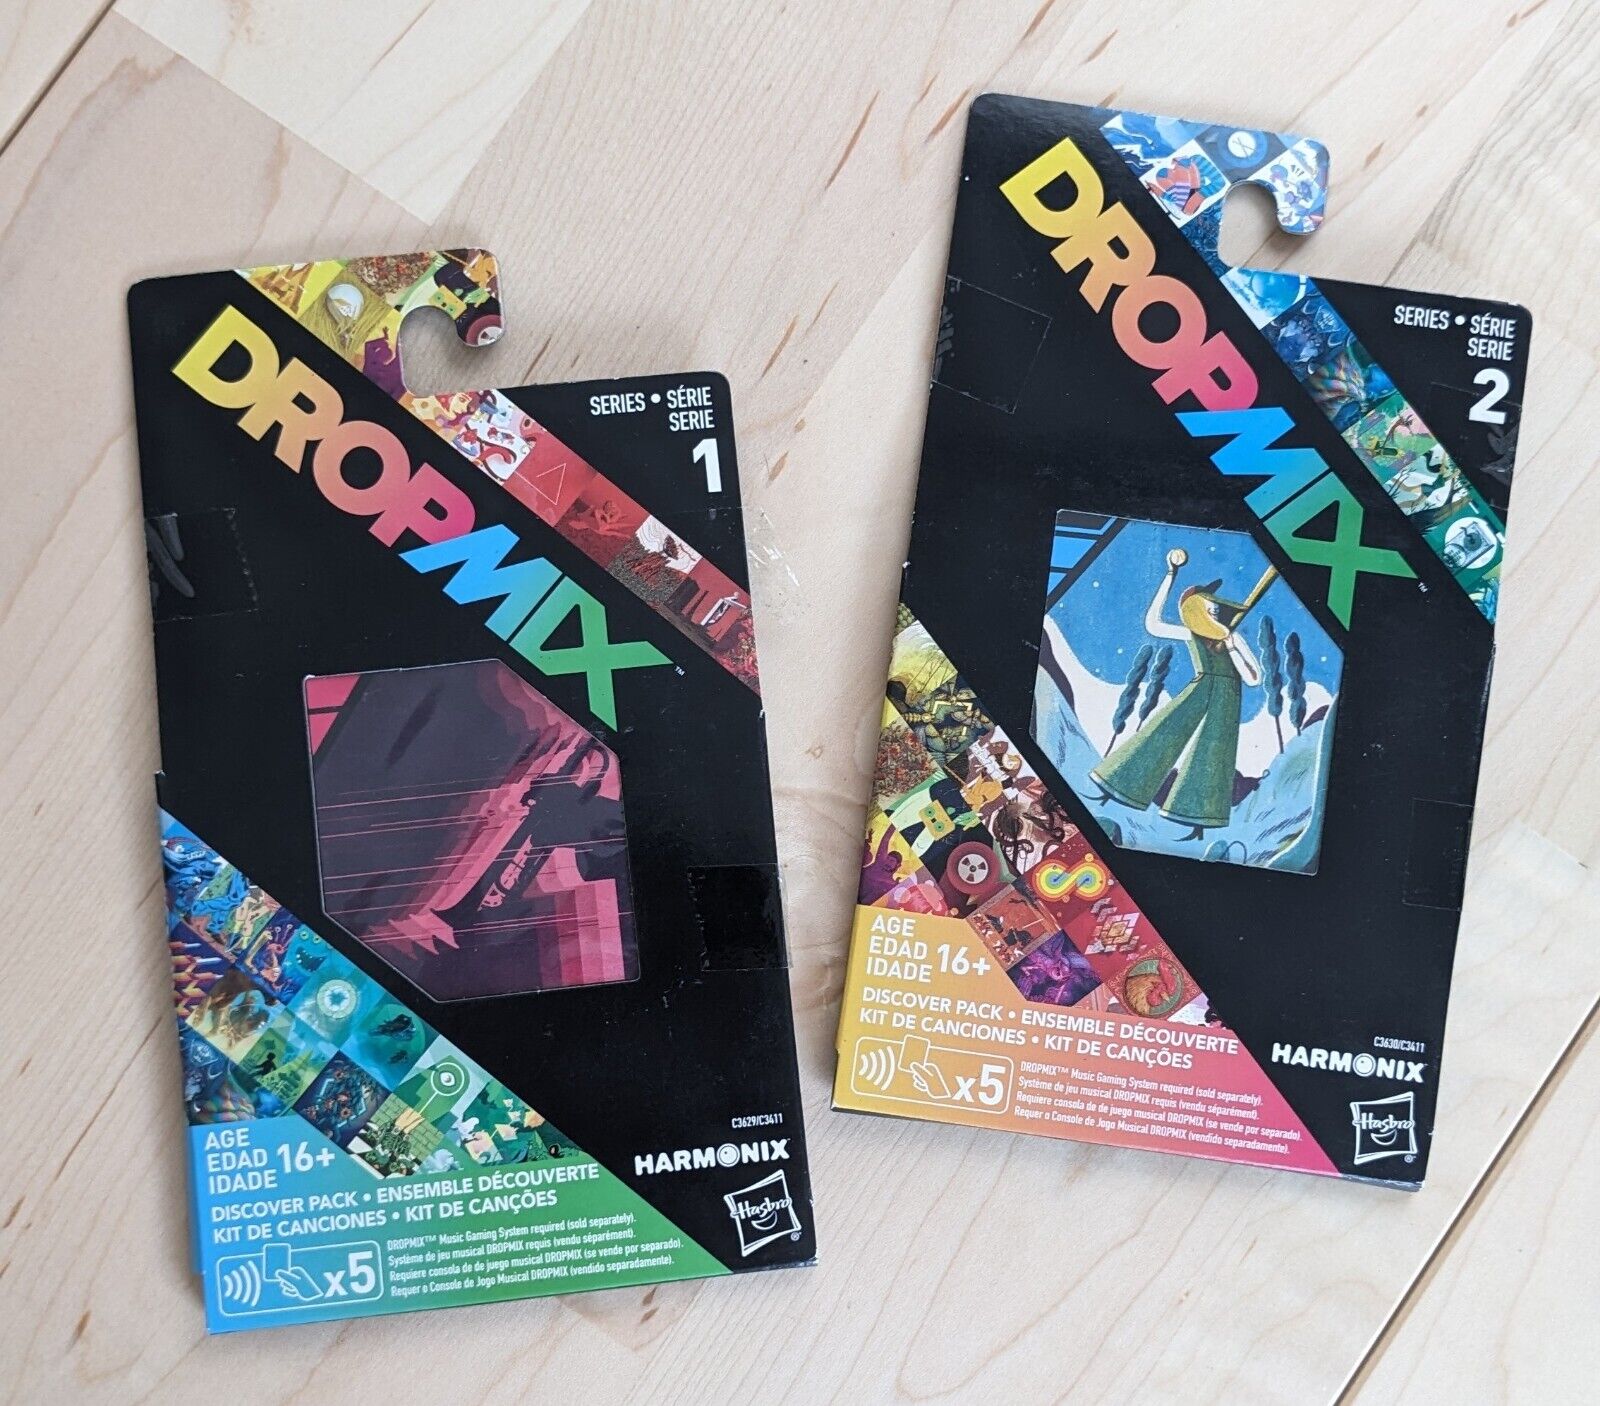 Lot of 2 DropMix Discover Packs Sealed Brand New, Series 1 & 2, Hasbro HARMONIX